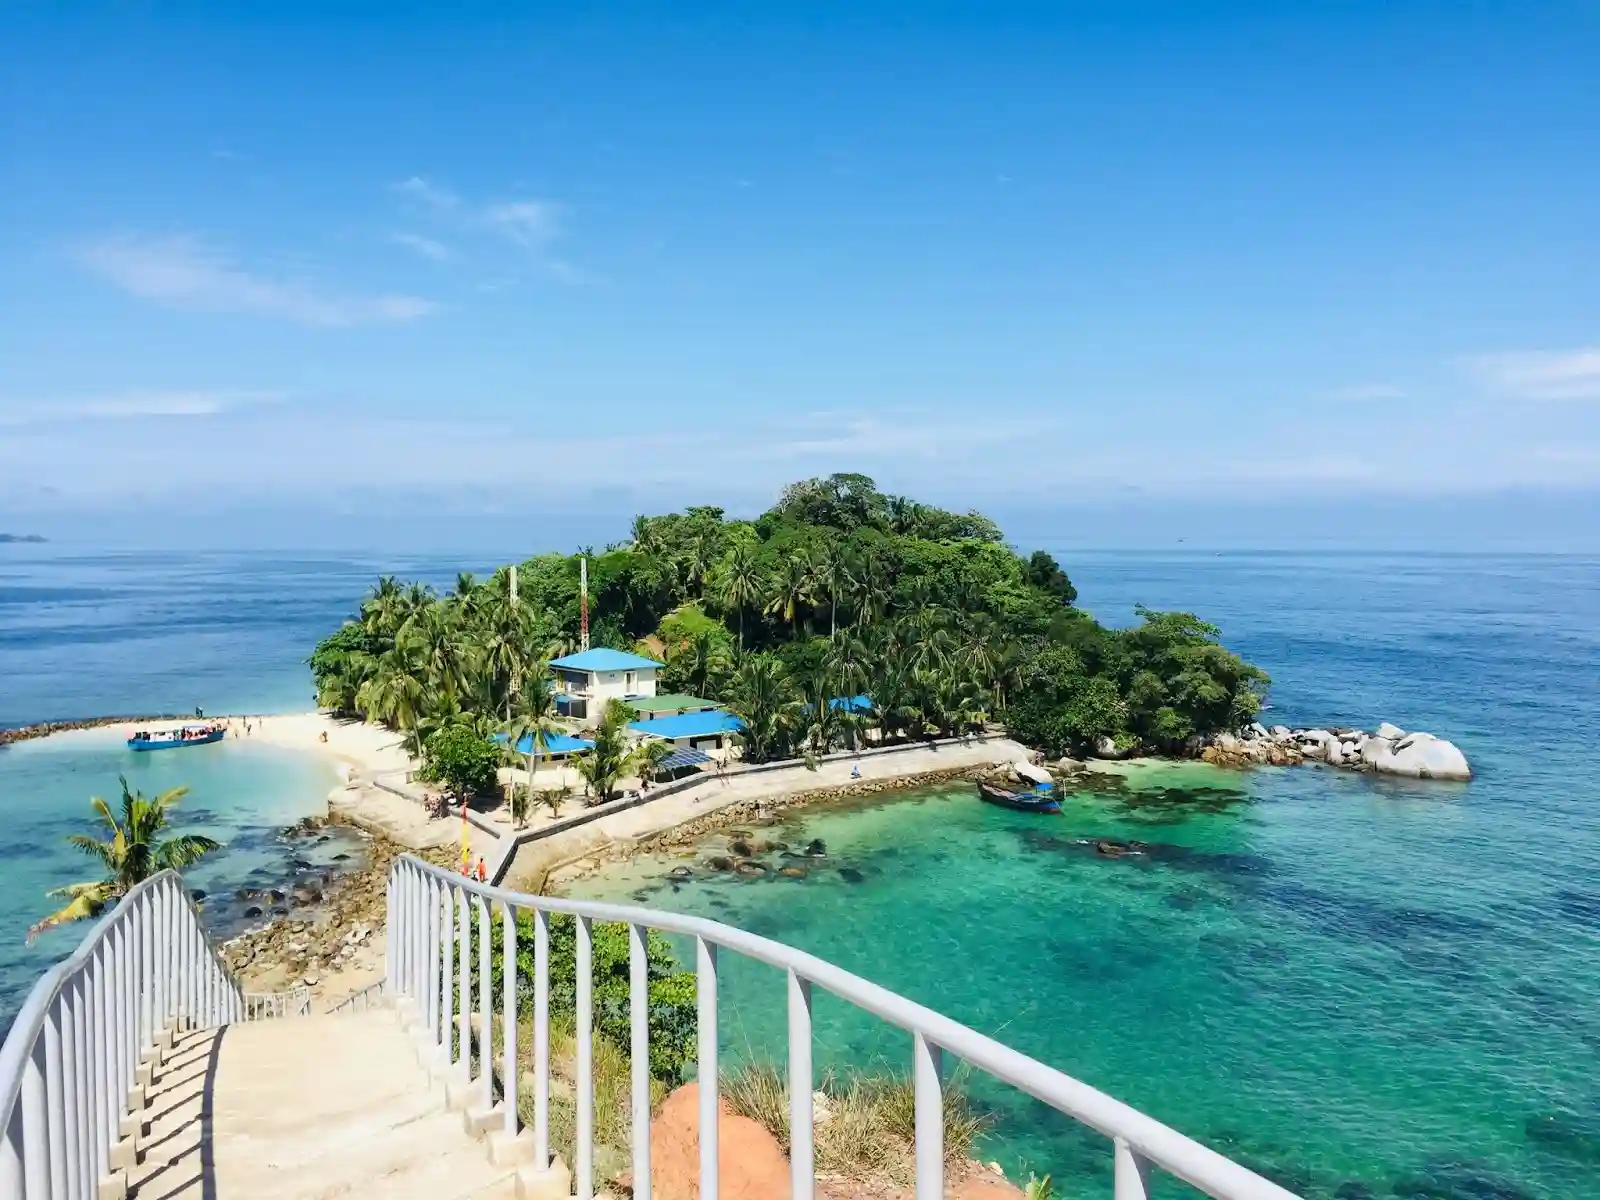 Harga Tiket Masuk Pulau Pandang Terbaru